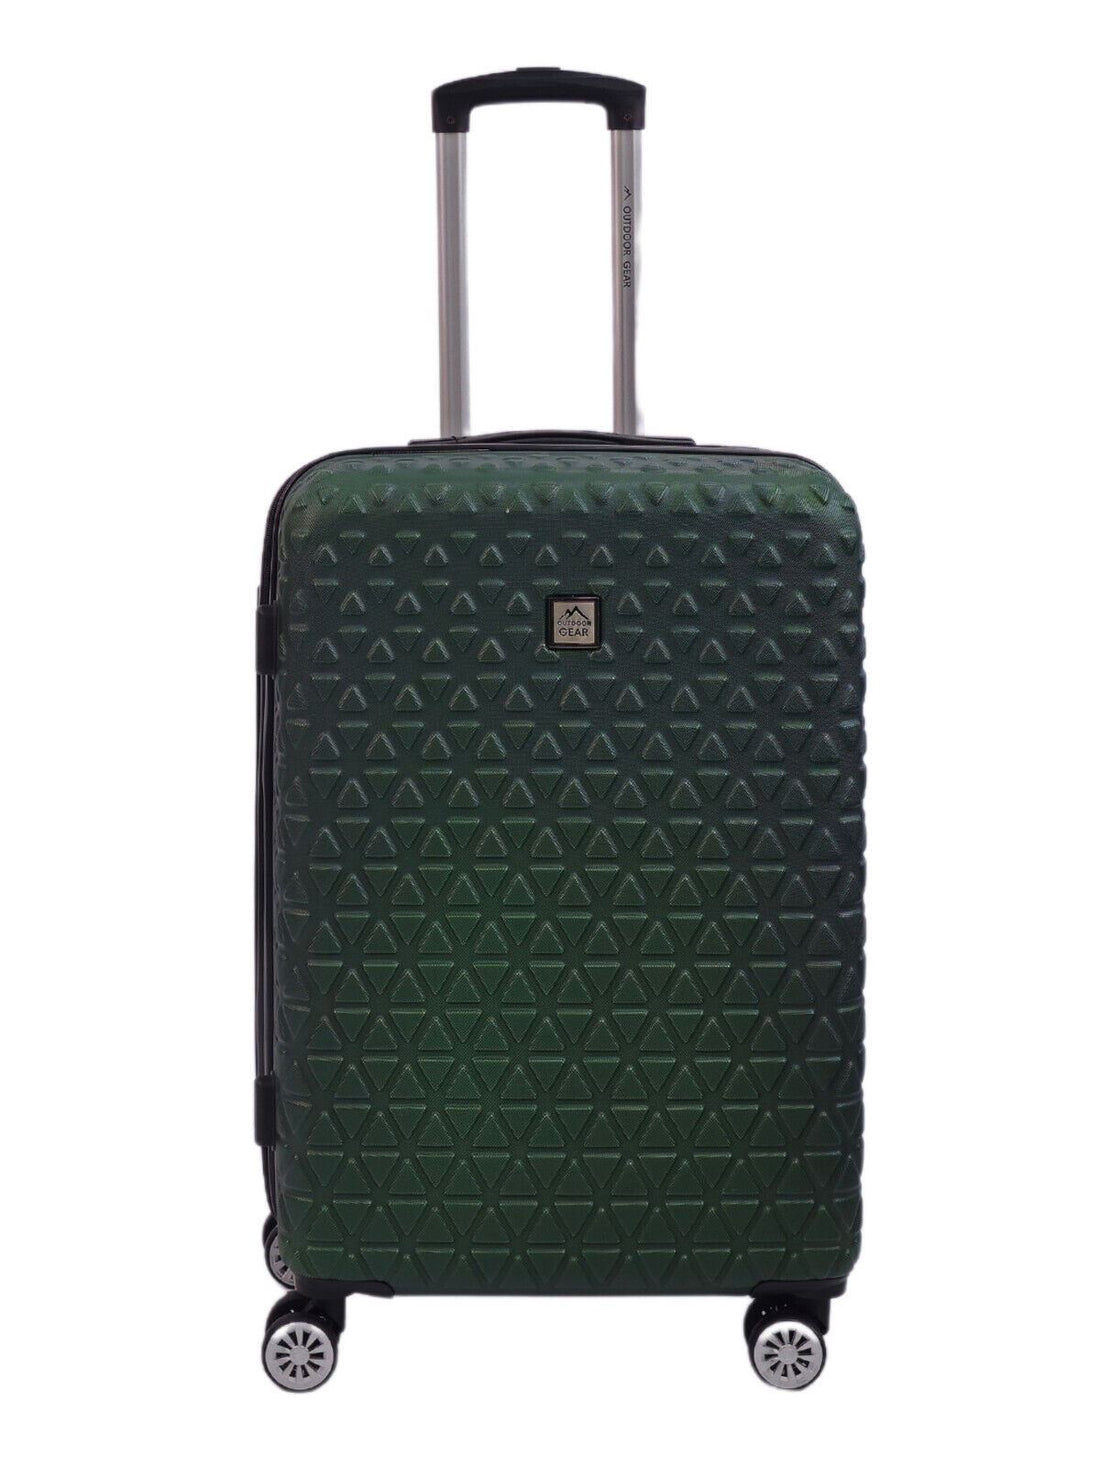 Hardshell Green Suitcase Robust 8 Wheel Luggage Cabin Bag